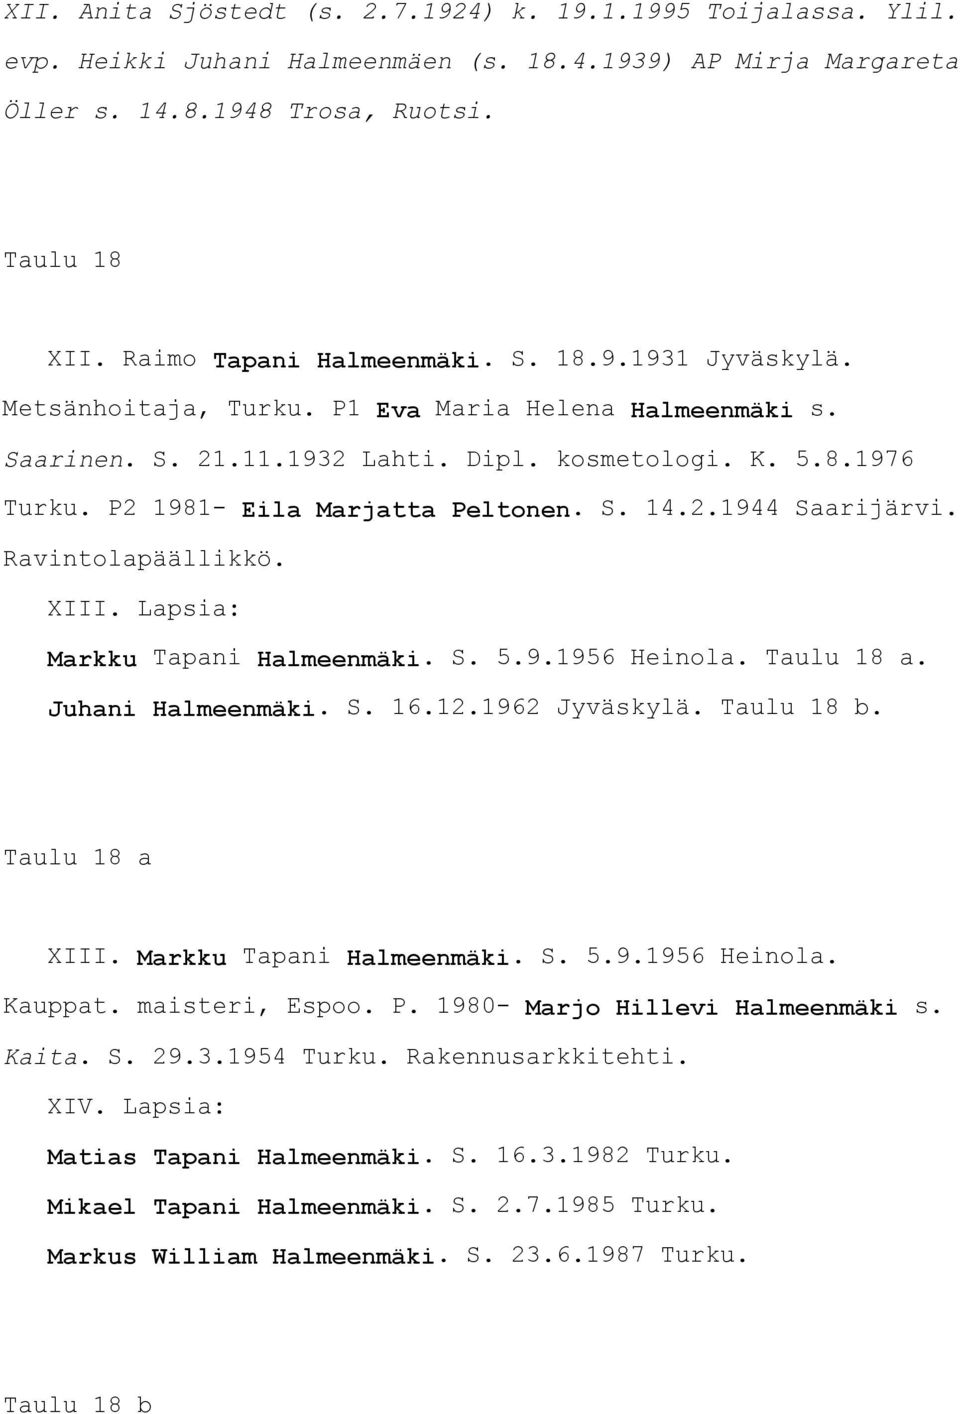 P2 1981- Eila Marjatta Peltonen. S. 14.2.1944 Saarijärvi. Ravintolapäällikkö. Markku Tapani Halmeenmäki. S. 5.9.1956 Heinola. Taulu 18 a. Juhani Halmeenmäki. S. 16.12.1962 Jyväskylä. Taulu 18 b.